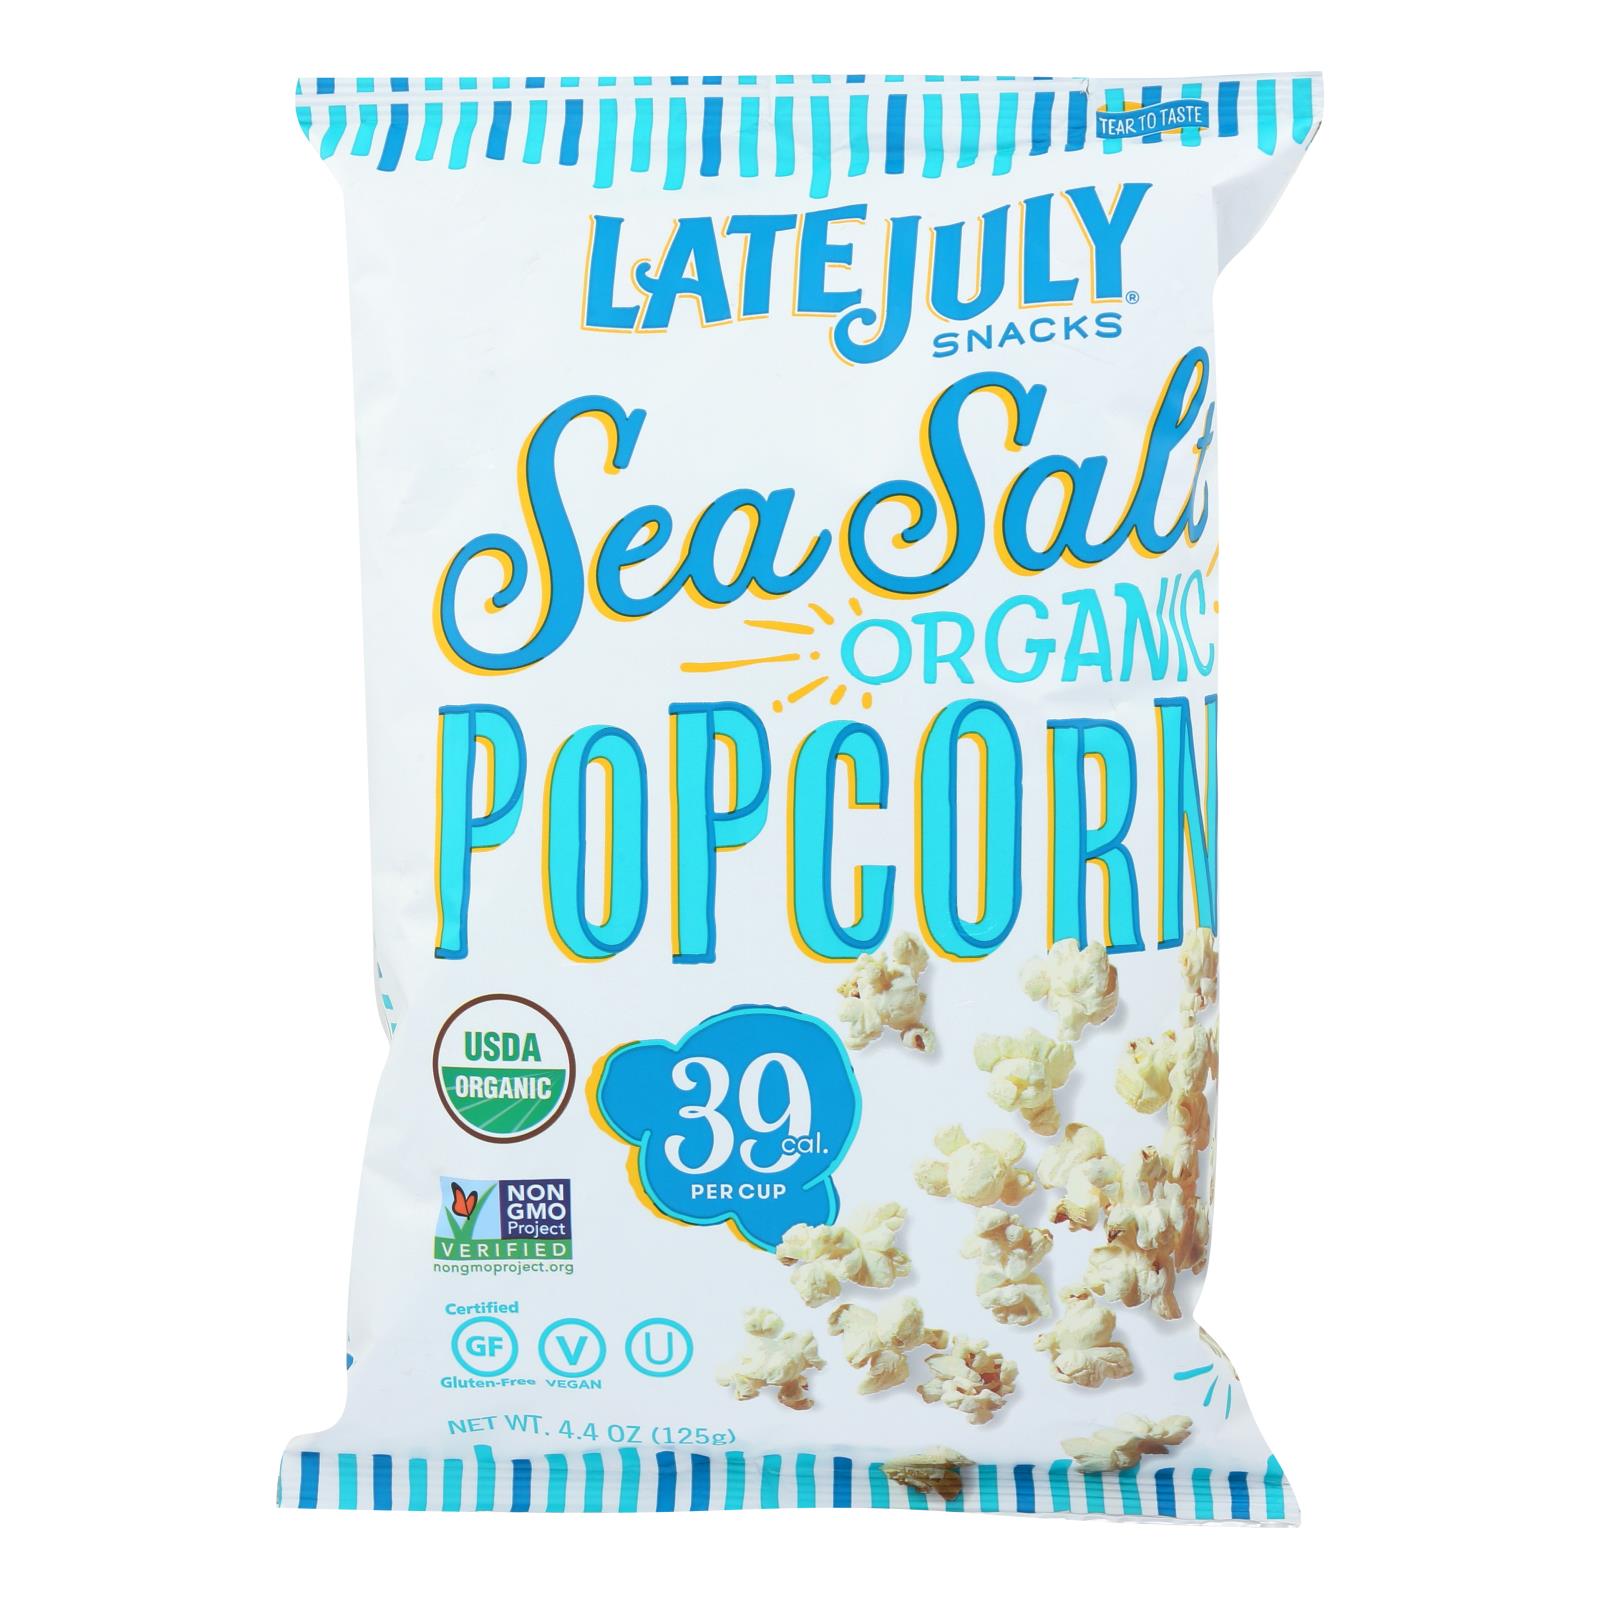 Late July Snacks Organic Popcorn - 12개 묶음상품 - 4.4 OZ